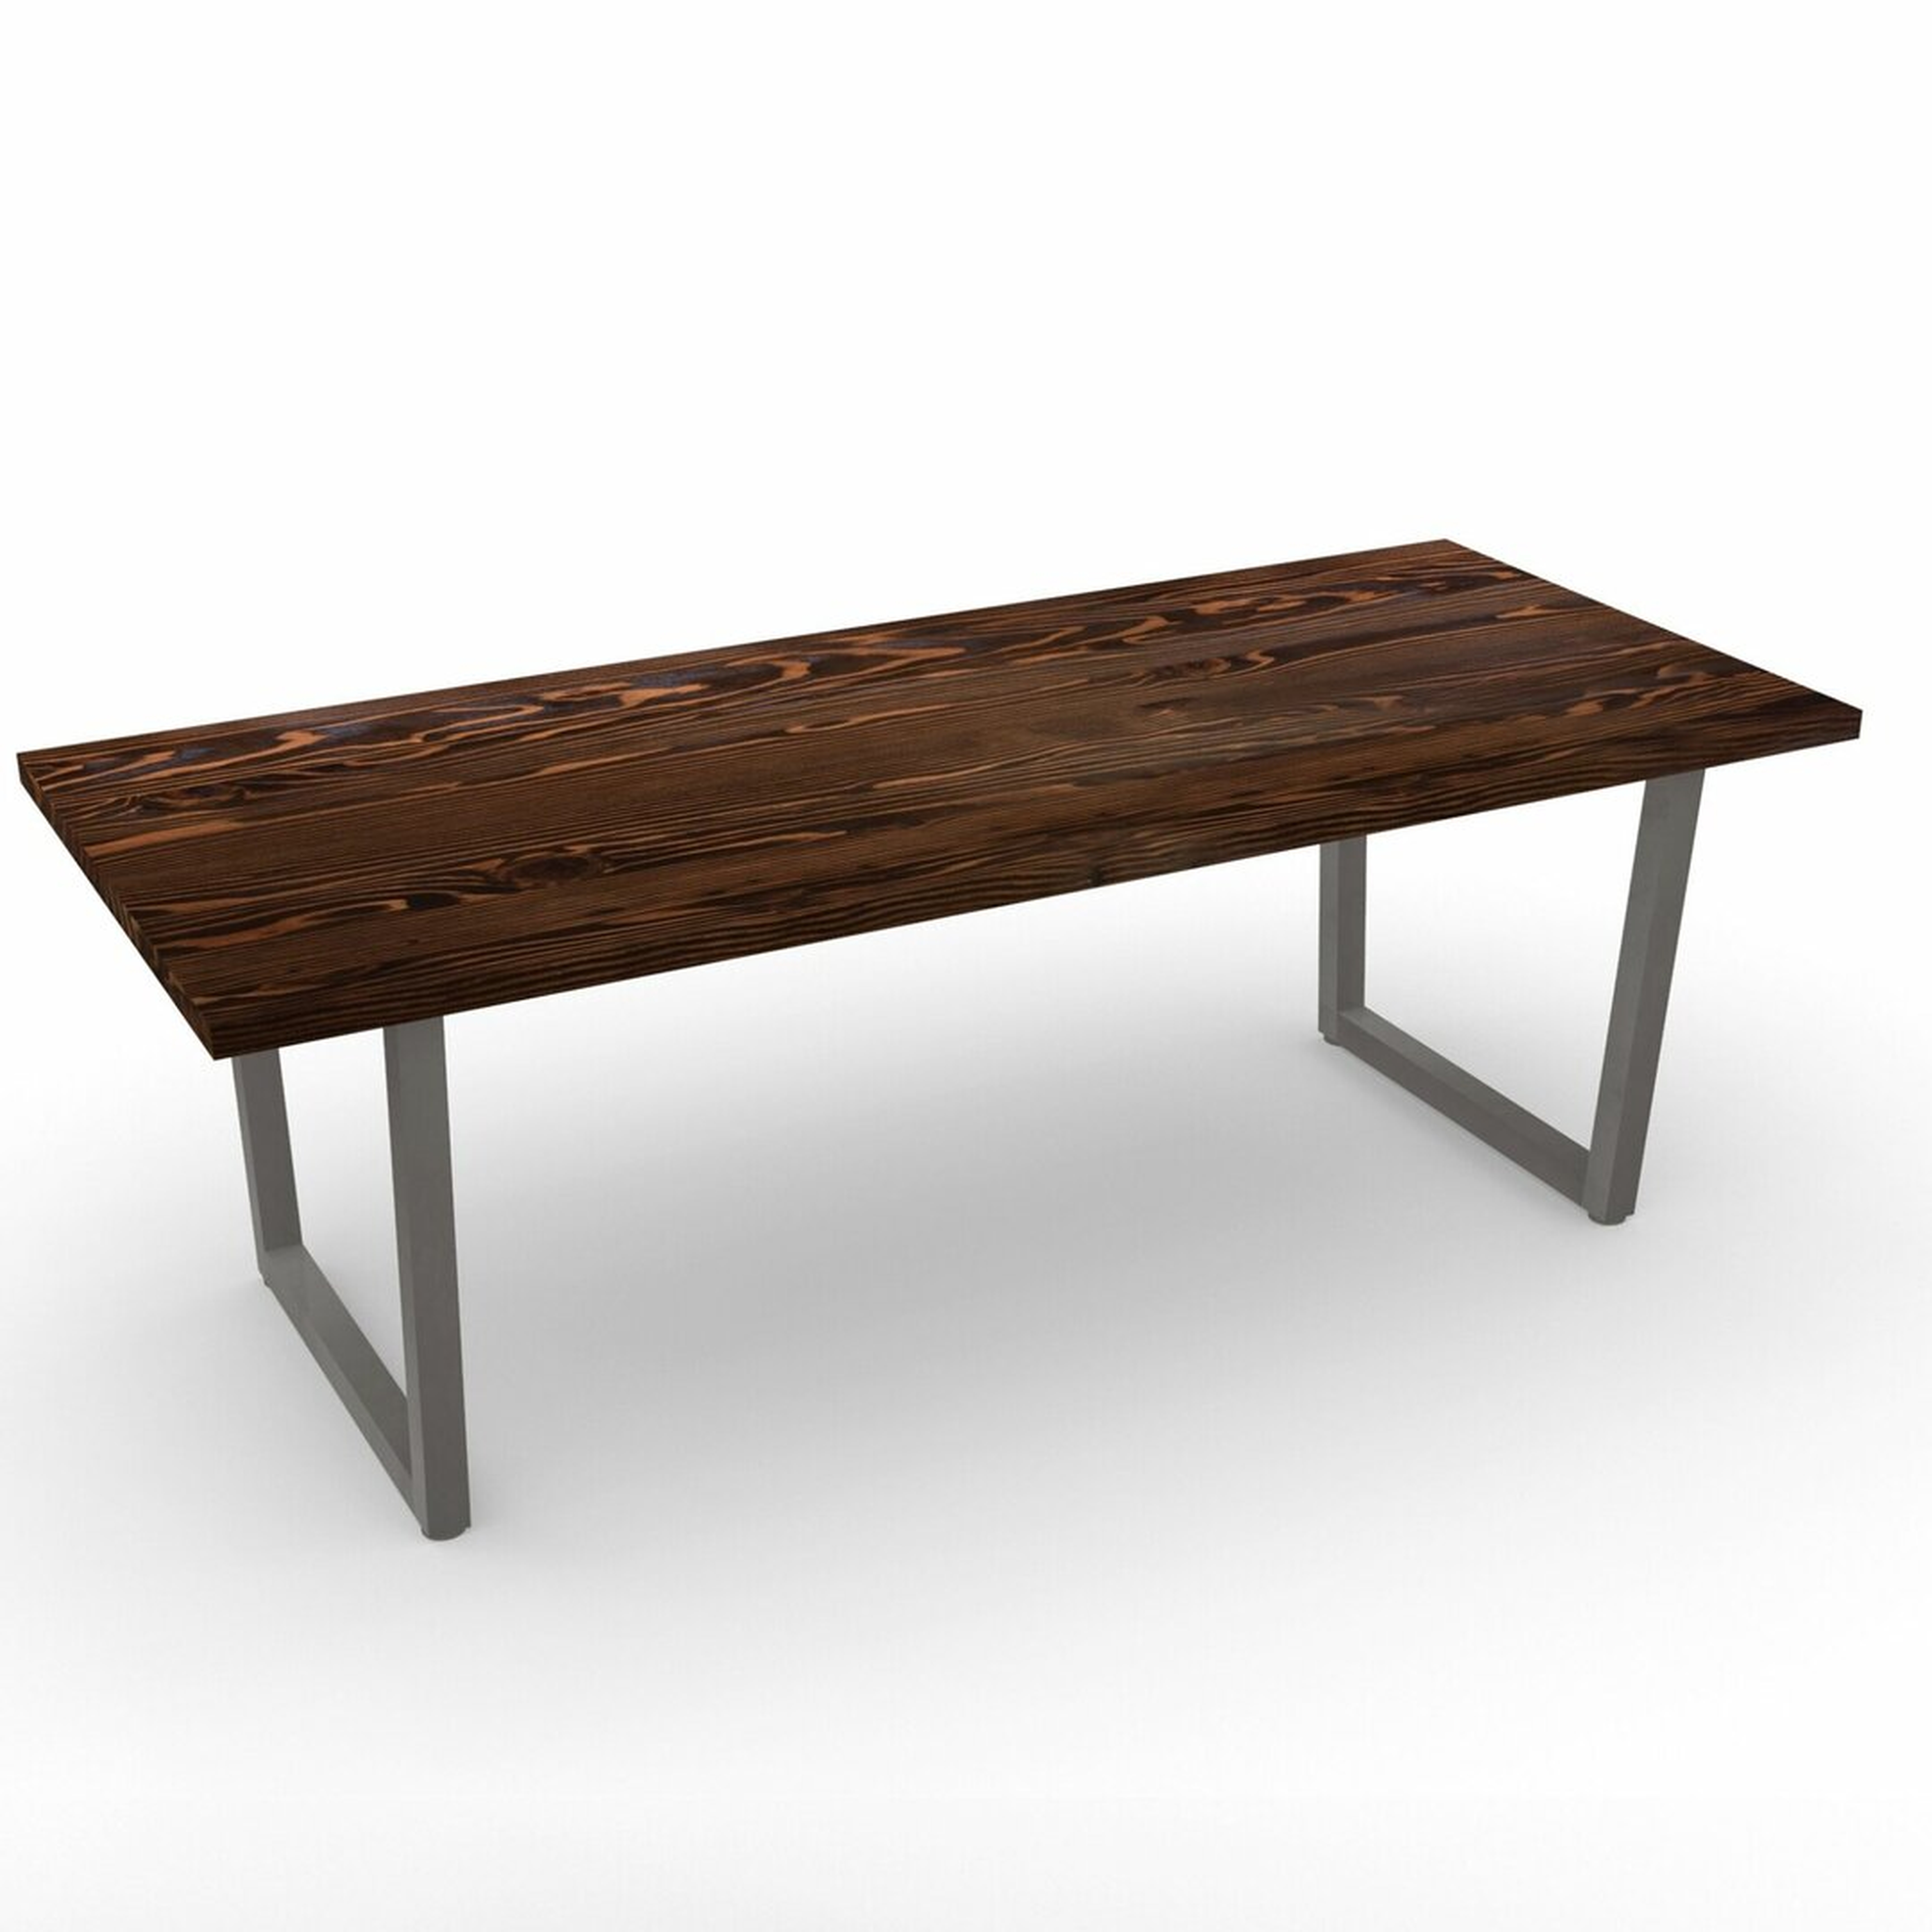 "Urban Wood Goods Brooklyn Modern Rustic Reclaimed Wood Dining Table" - Perigold